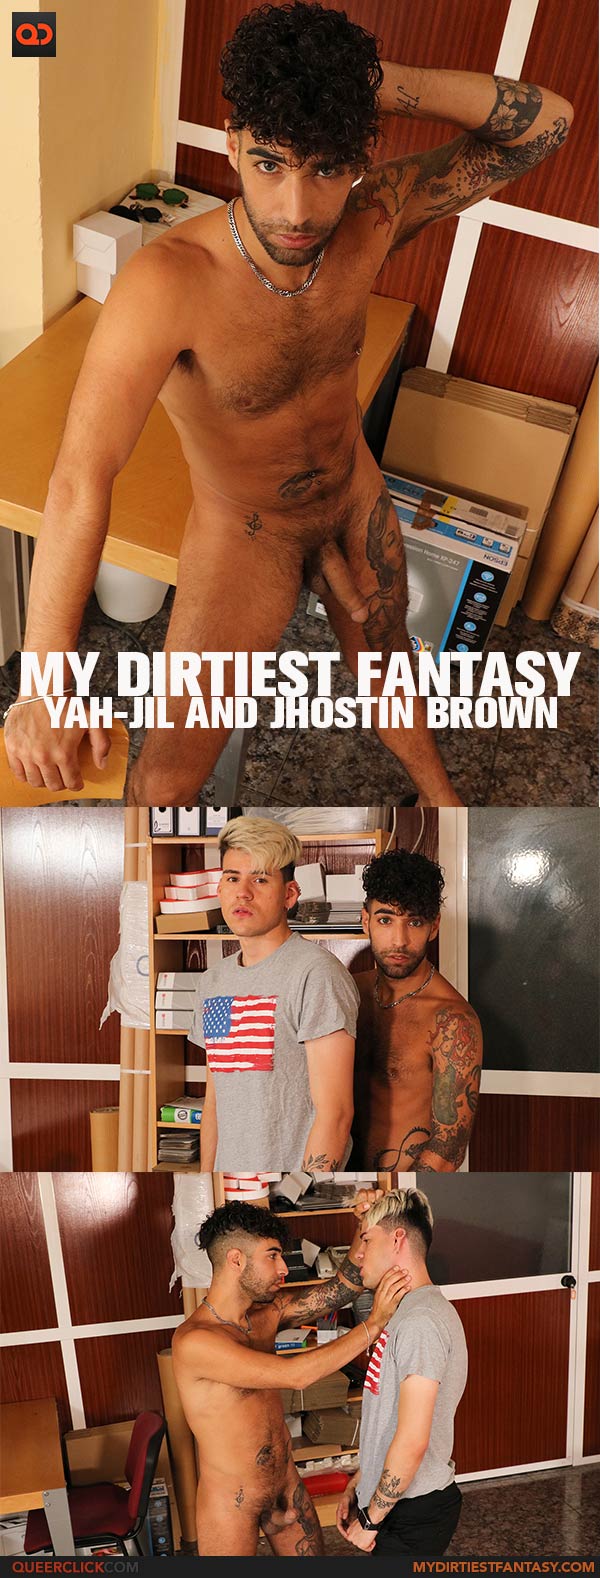 My Dirtiest Fantasy:  Yah-Jil and Jhostin Brown